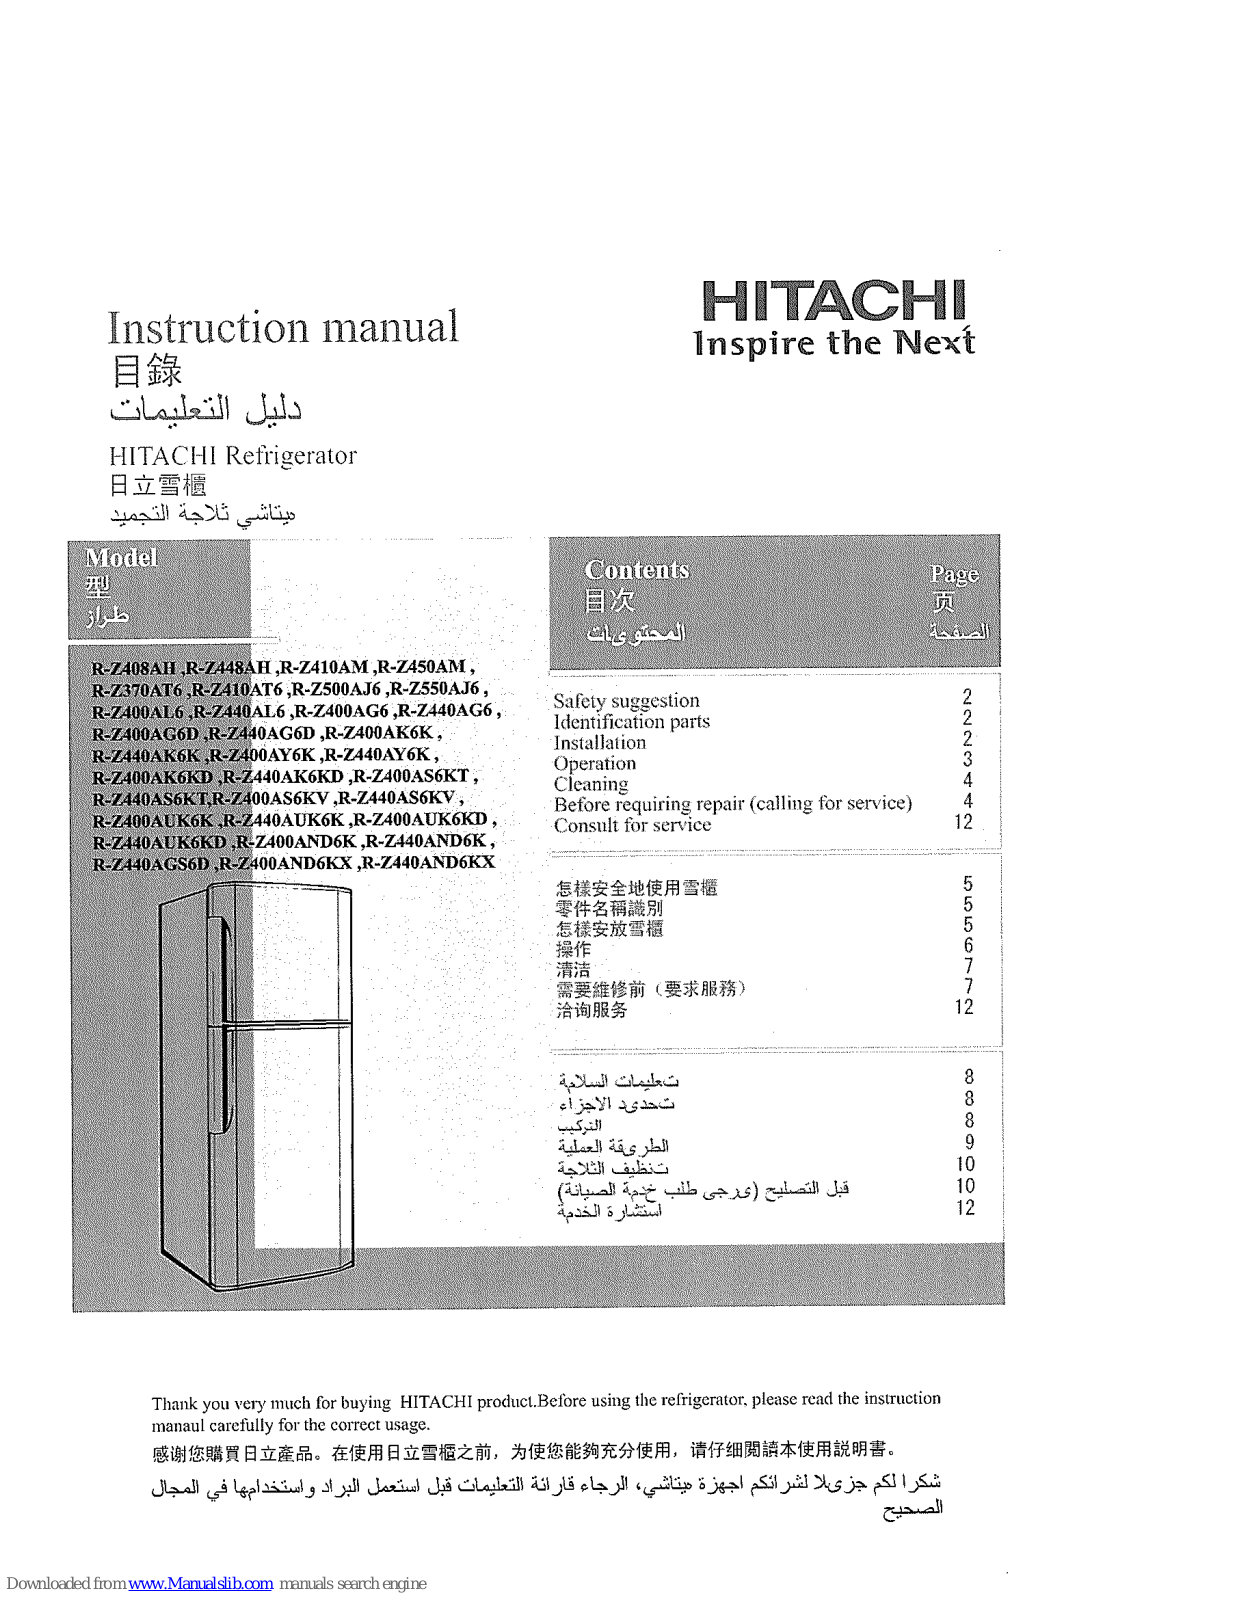 Hitachi R-Z448AH, R-Z450AM, R-Z410AM, R-Z370AT6, R-Z410AT6 Instruction Manual